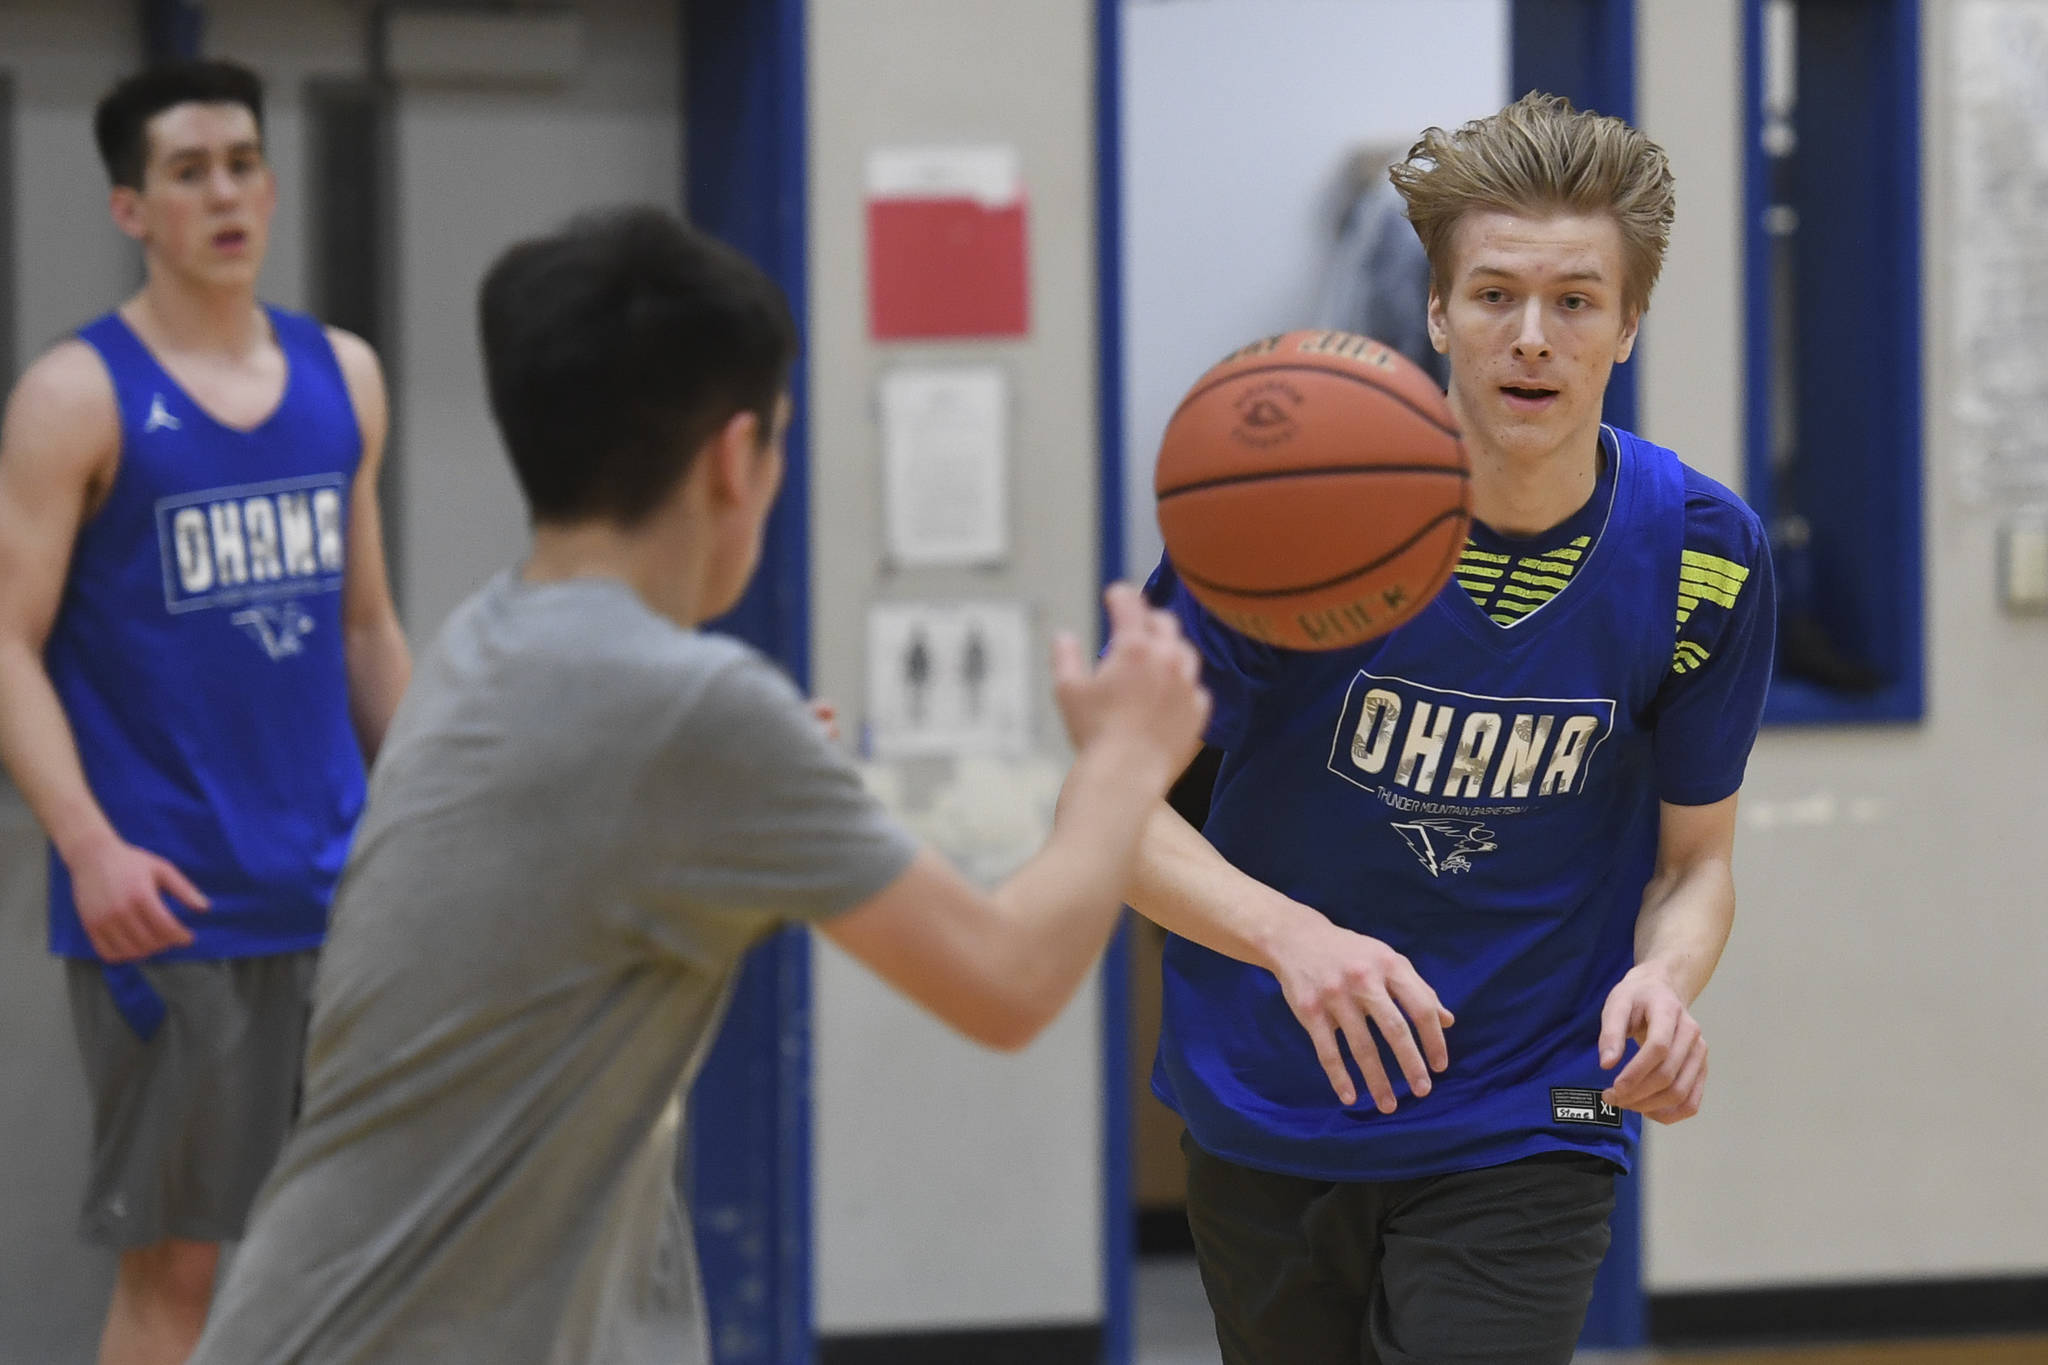 Stone Morgan, right, makes a pass during boys varsity basketball practice at Thunder Mountain High School on Tuesday, Dec. 10, 2019. (Michael Penn | Juneau Empire)